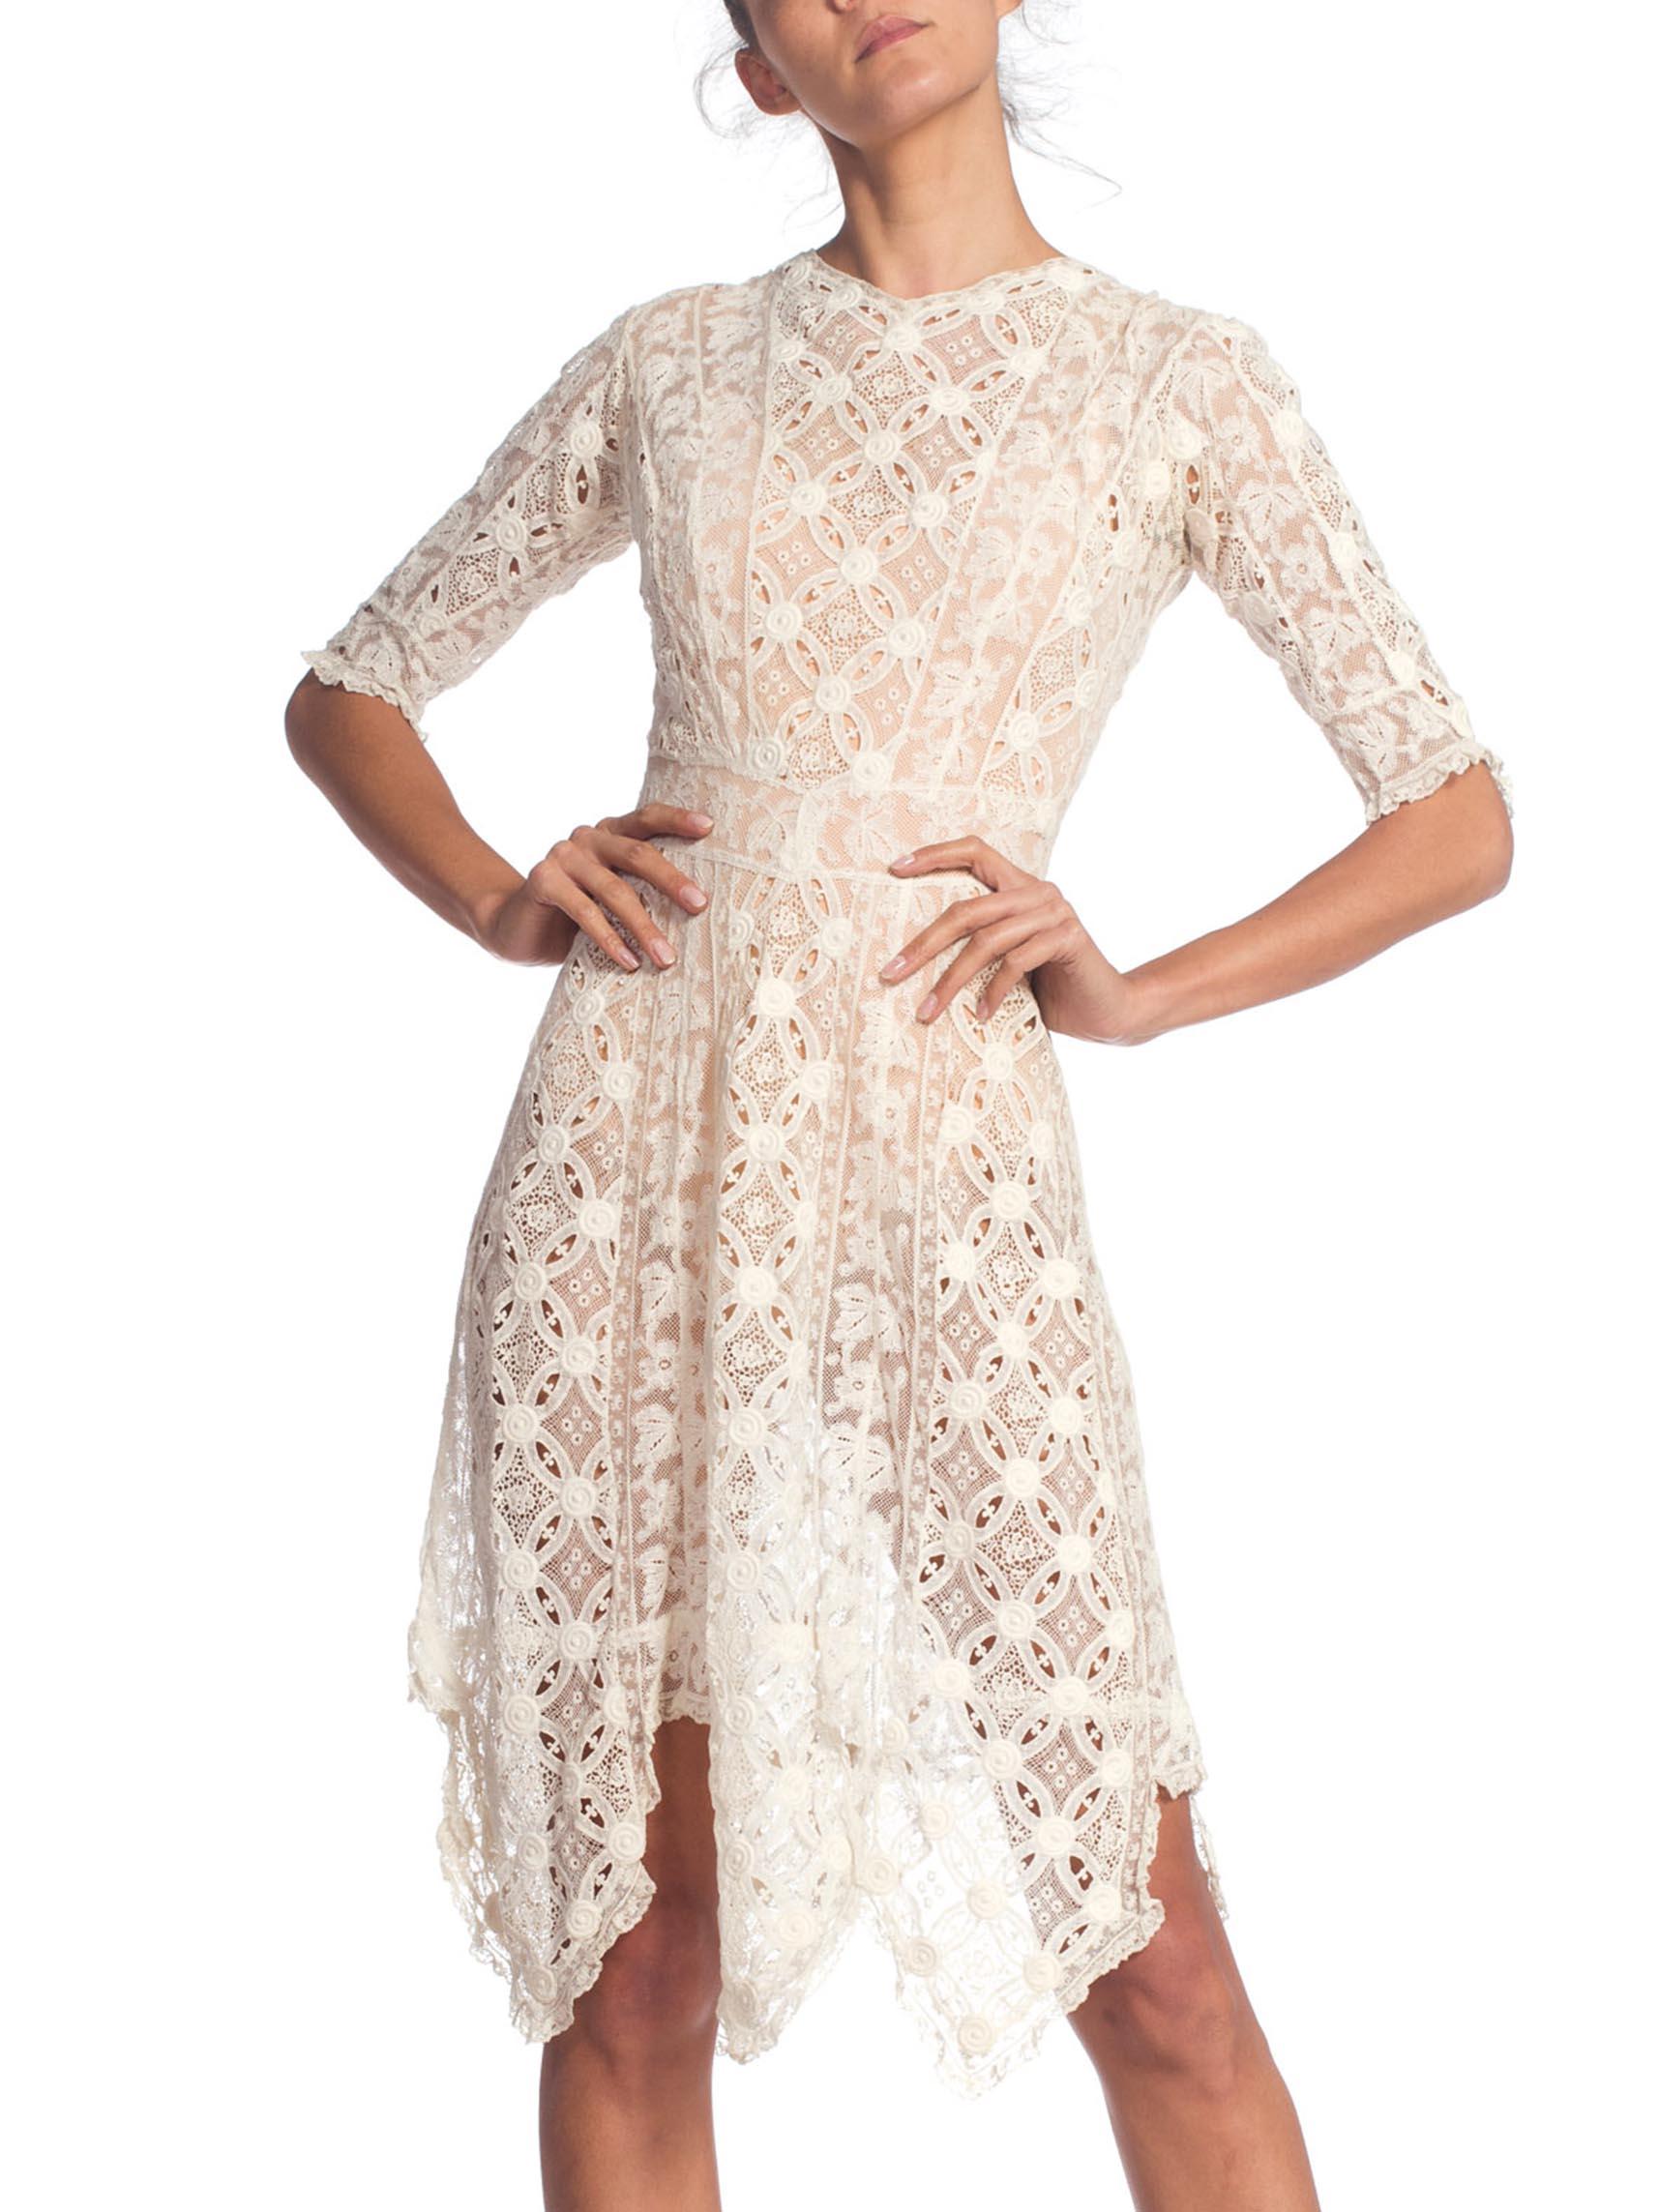 white cotton lace dress styles